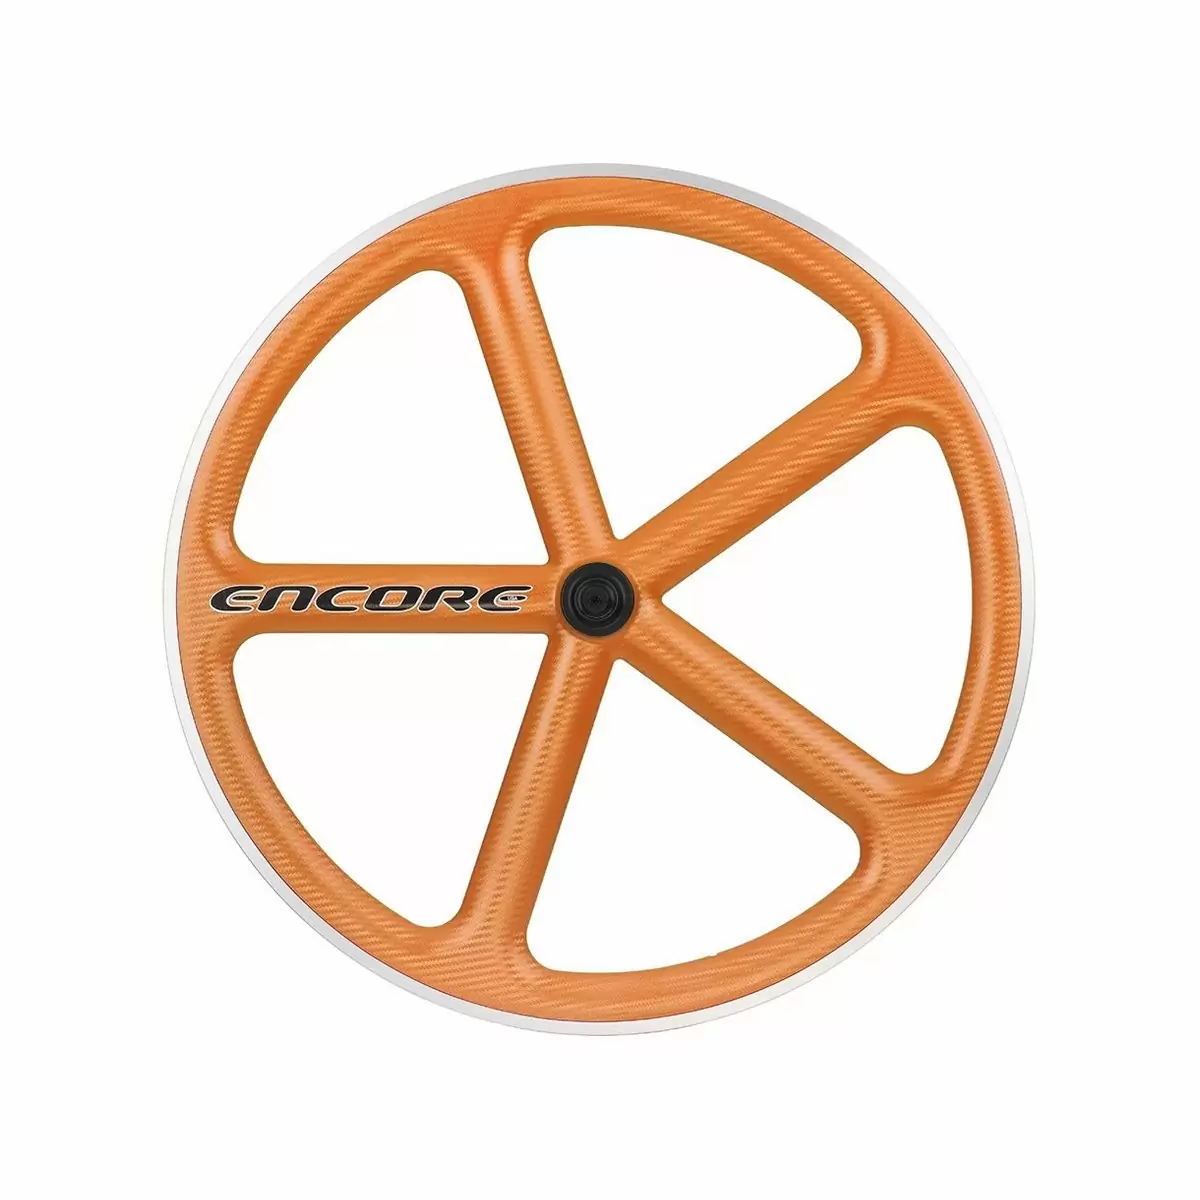 roda traseira 700c track 5 raios fibra de carbono laranja msw - image